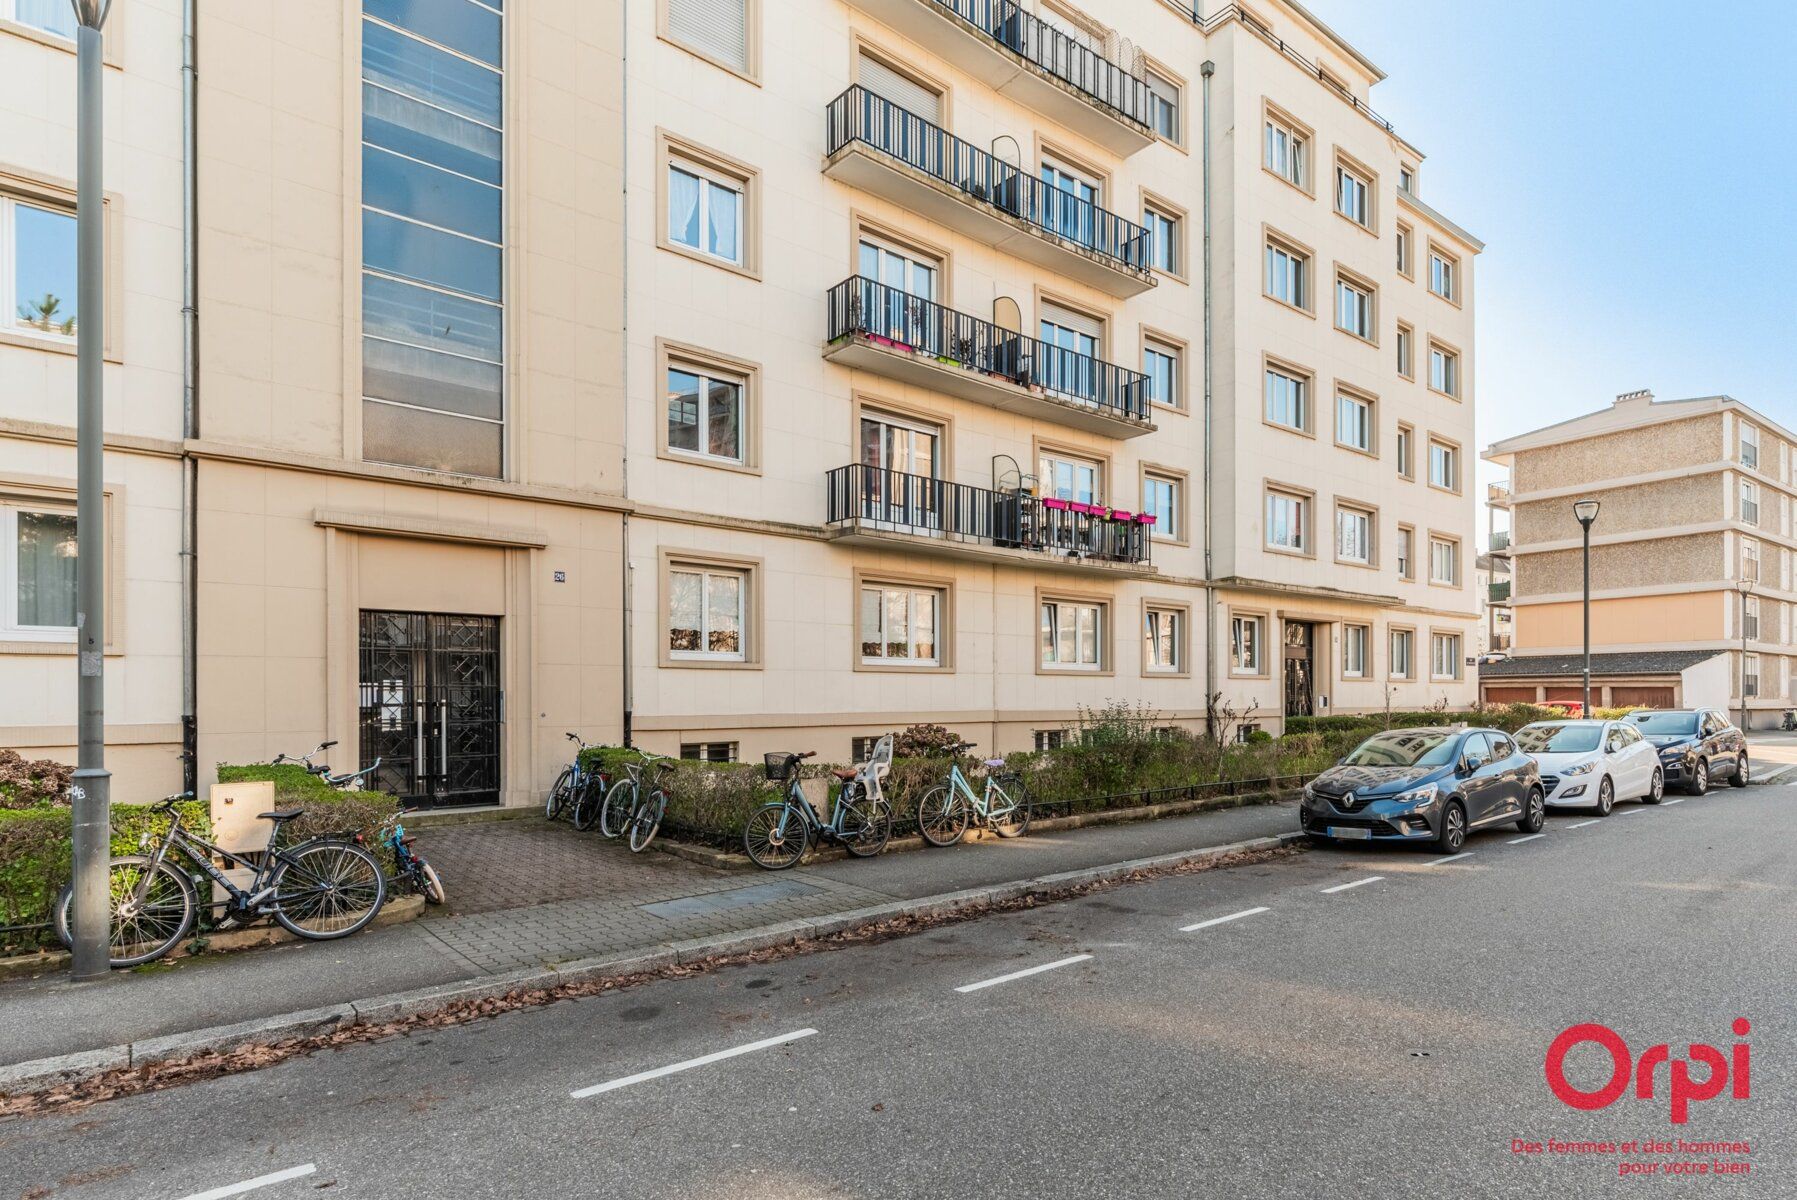 Appartement à vendre 3 72.94m2 à Strasbourg vignette-6